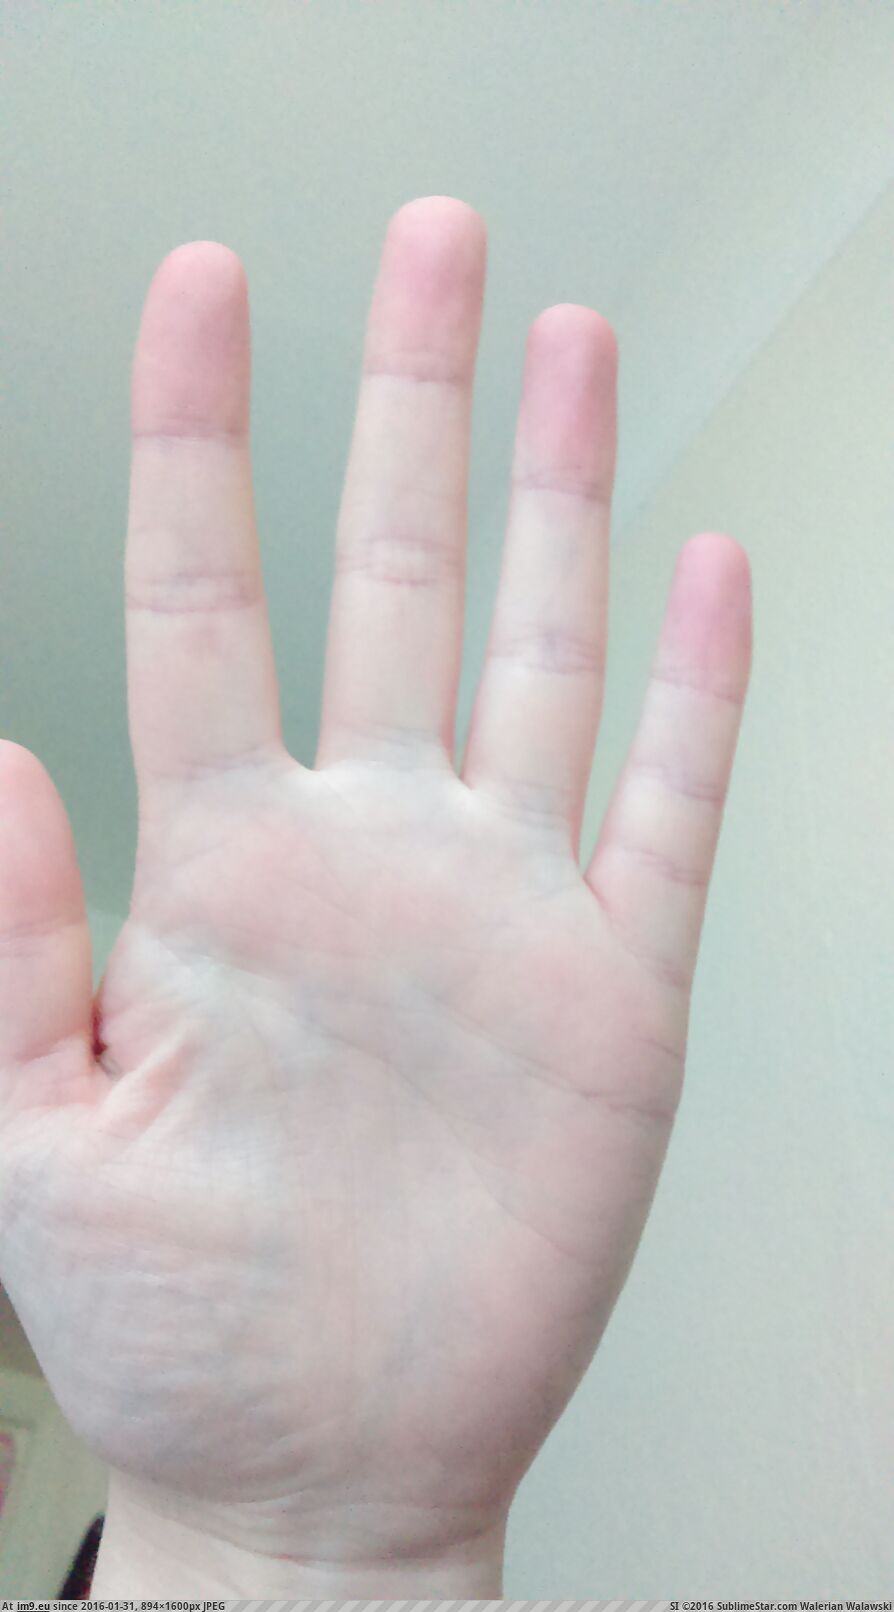 [Mildlyinteresting] My sister has an extra crease on her little finger (in My r/MILDLYINTERESTING favs)